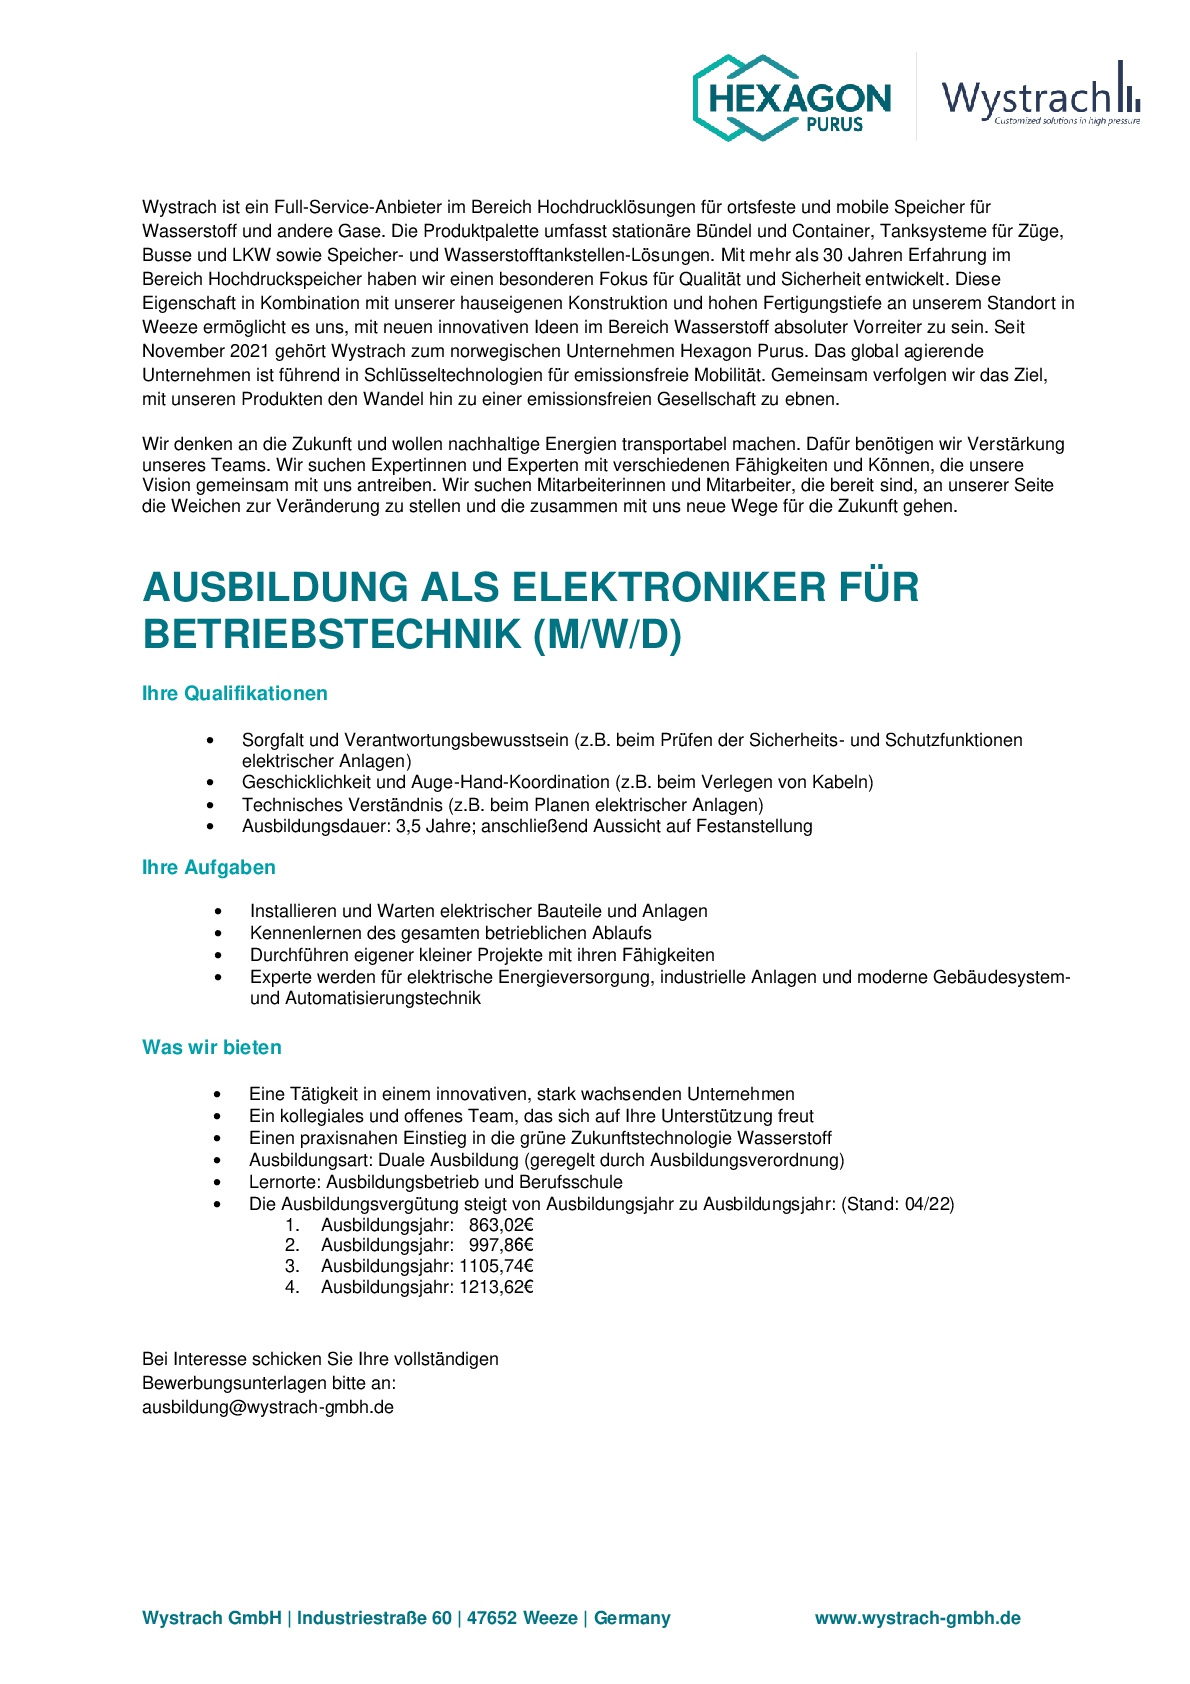 Elektroniker für Betriebstechnik (m/w/d)